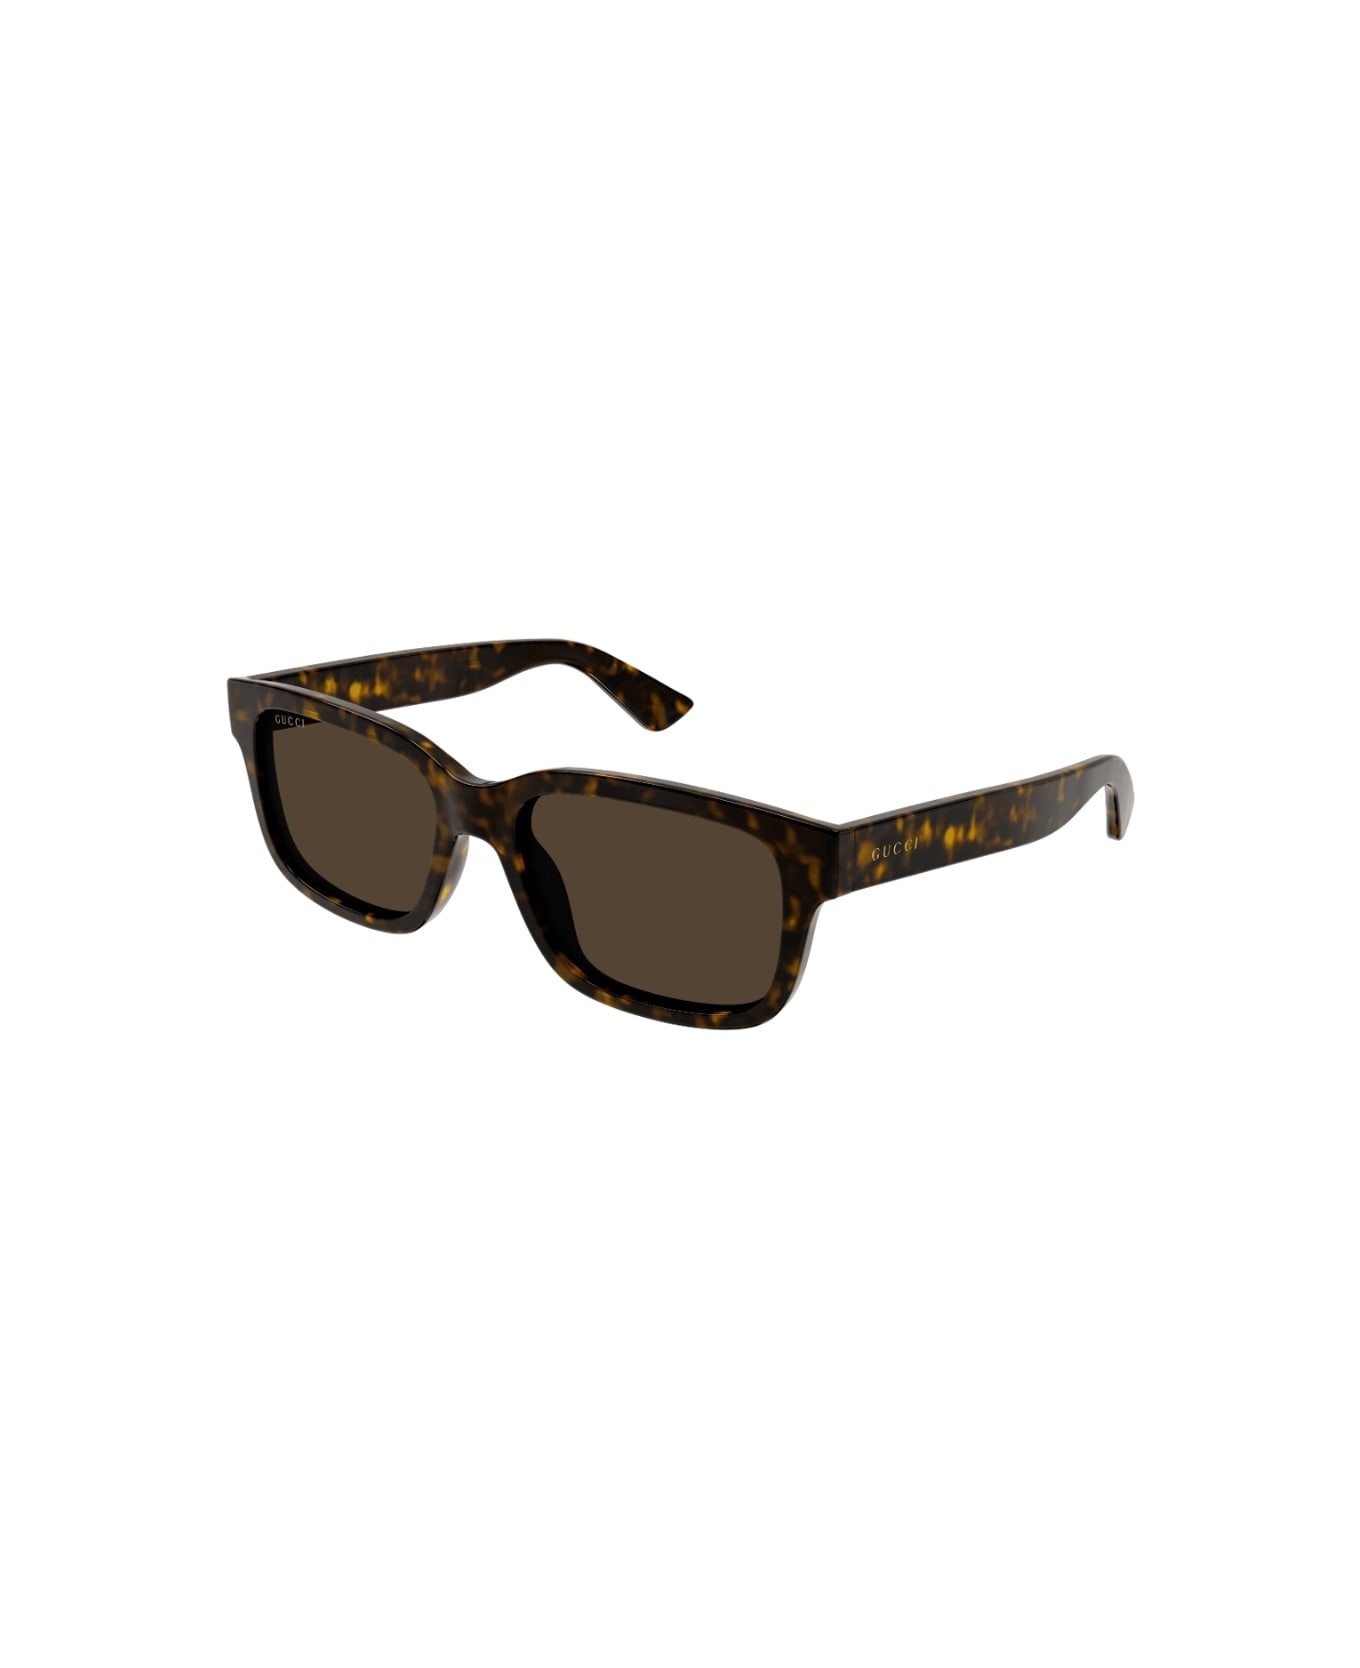 Gucci Eyewear GG1583s 002 Sunglasses